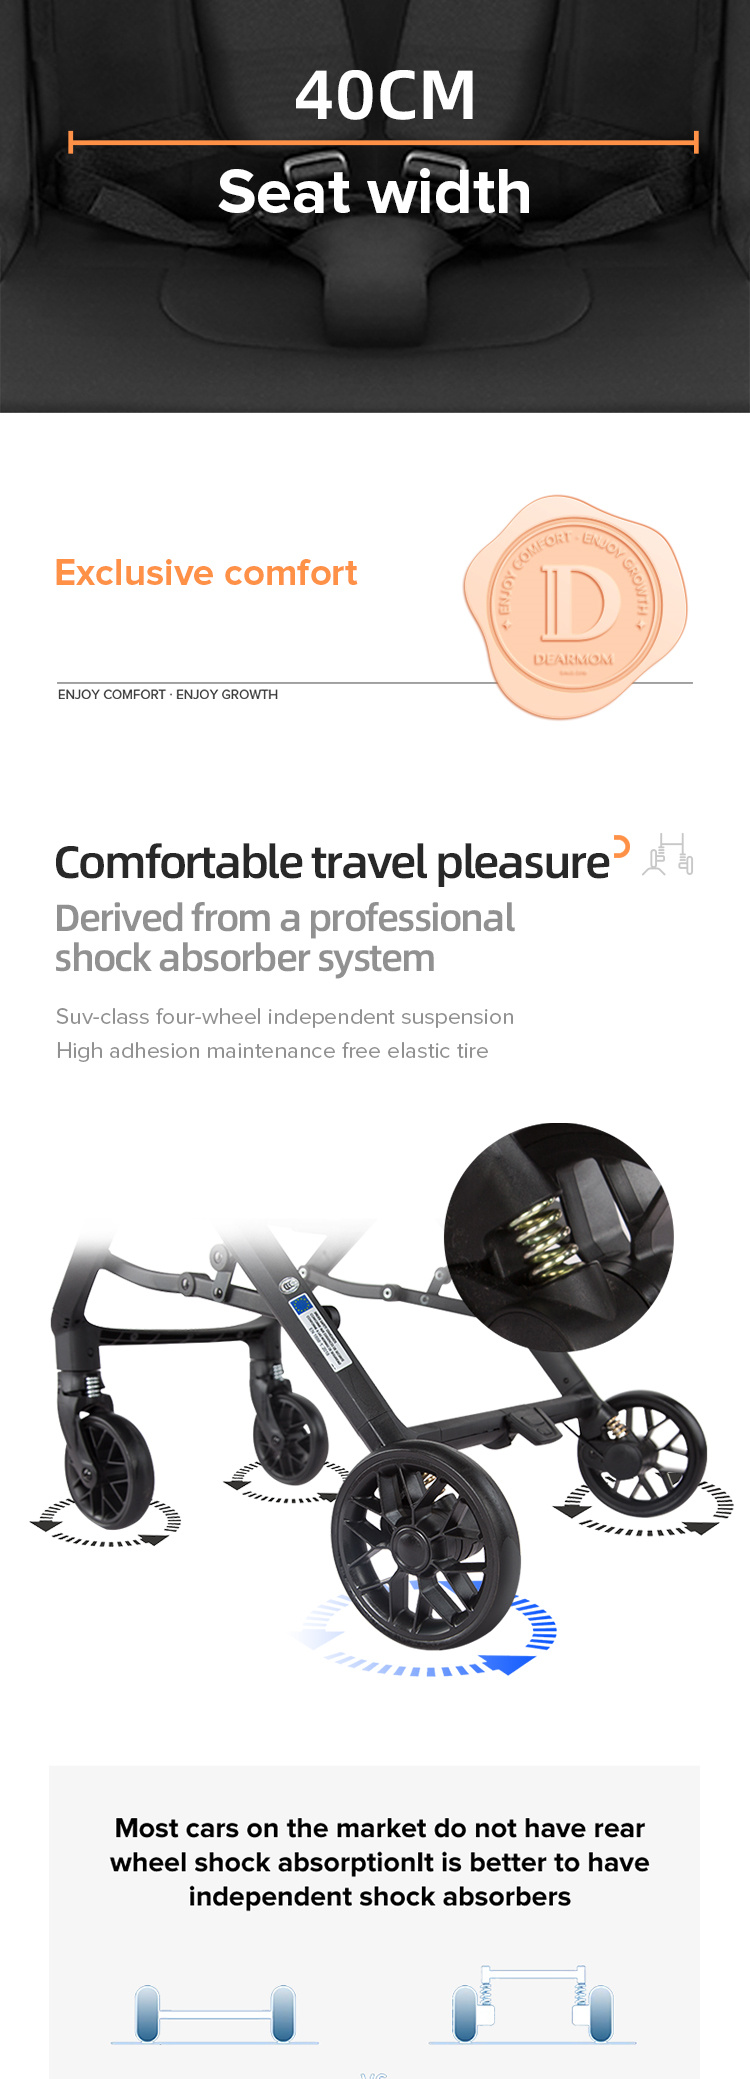 DearMom A8 portable one-second folding stroller